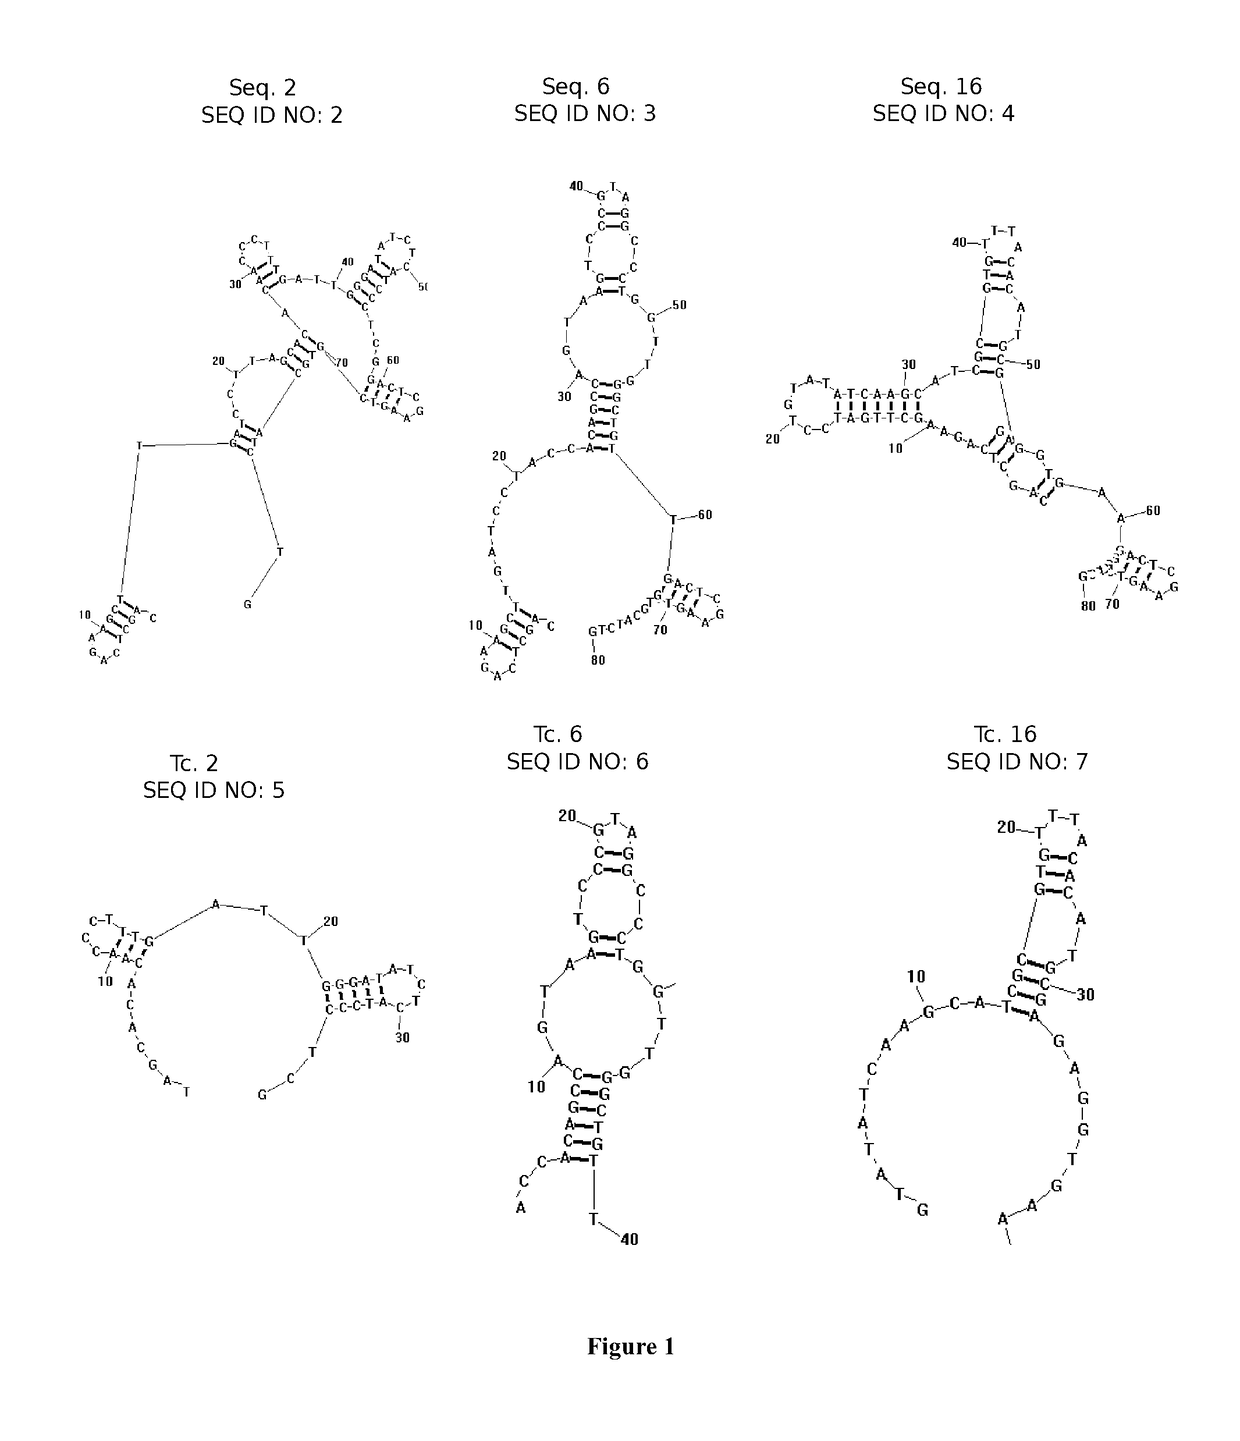 Specific oligonucleotide aptamer for the identification of T-2 toxin